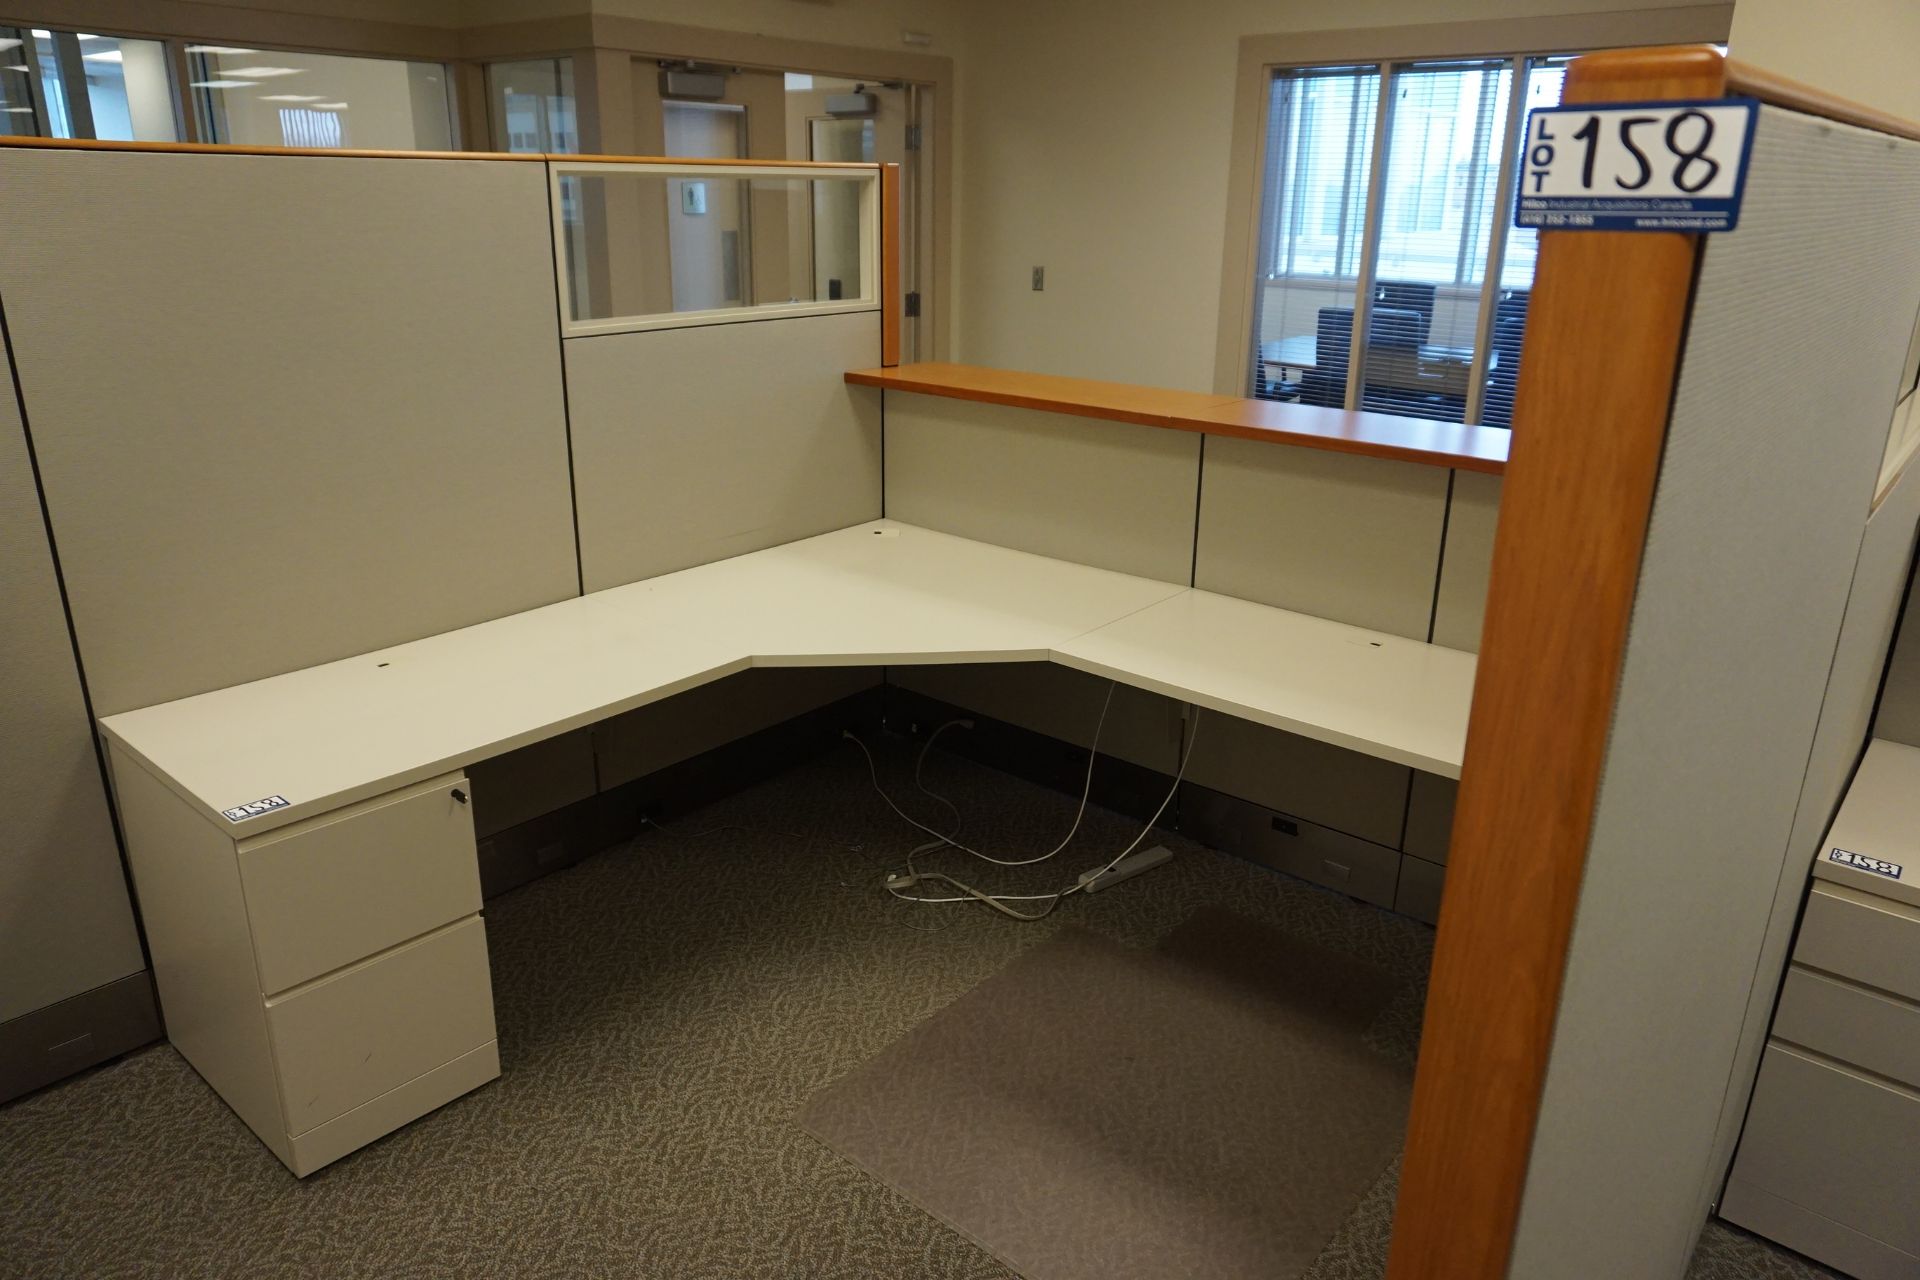 Knoll Reception Workstation with L-Shaped Desks - Image 4 of 4